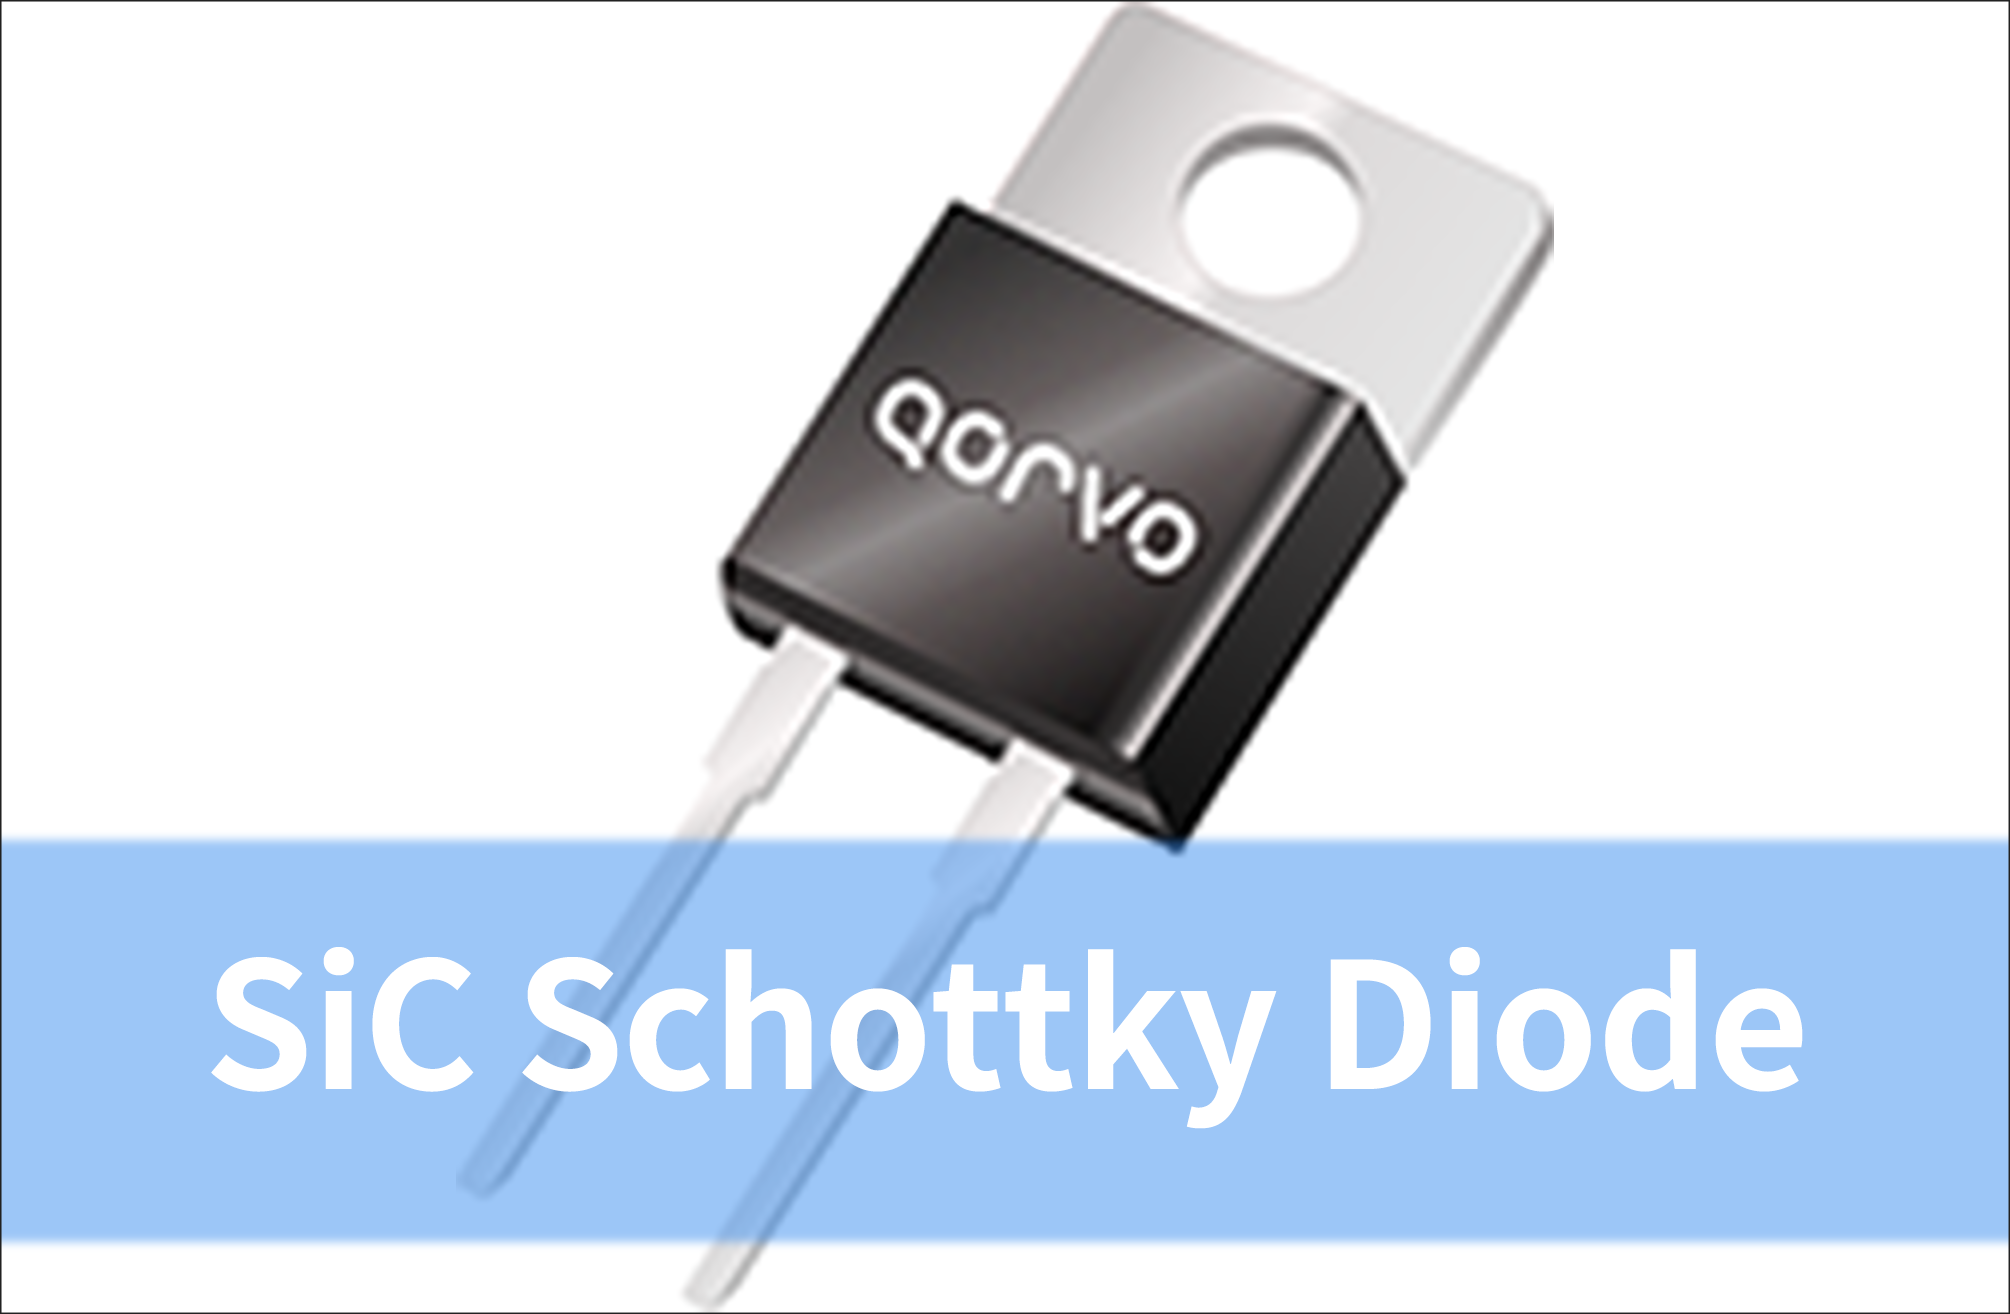 SiC Schottky Diode